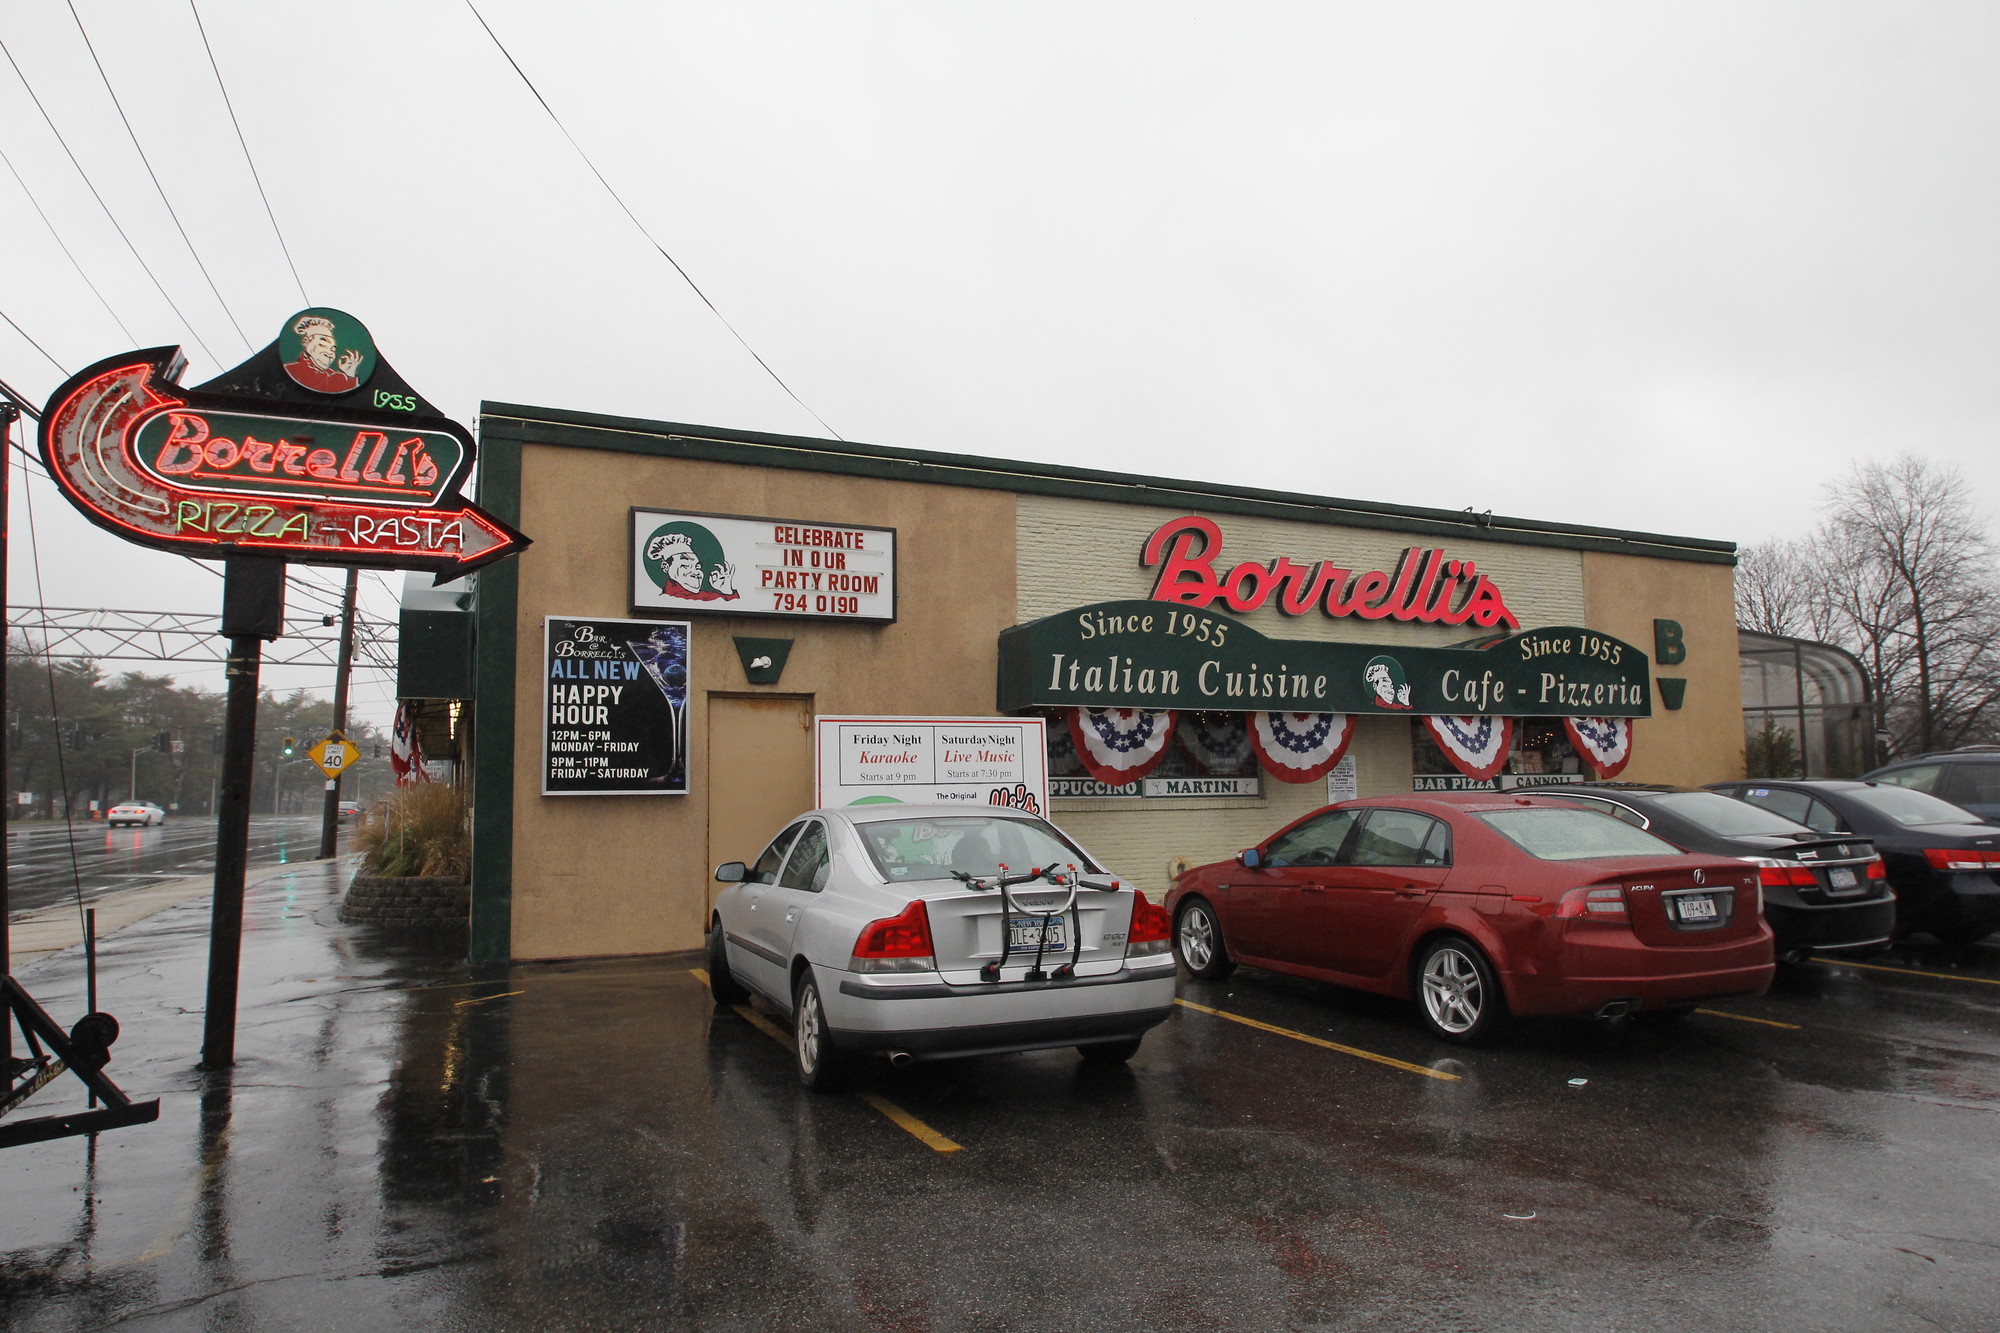 Borrelli’s Italian Restaurant has been open for business in East Meadow for 60 years.